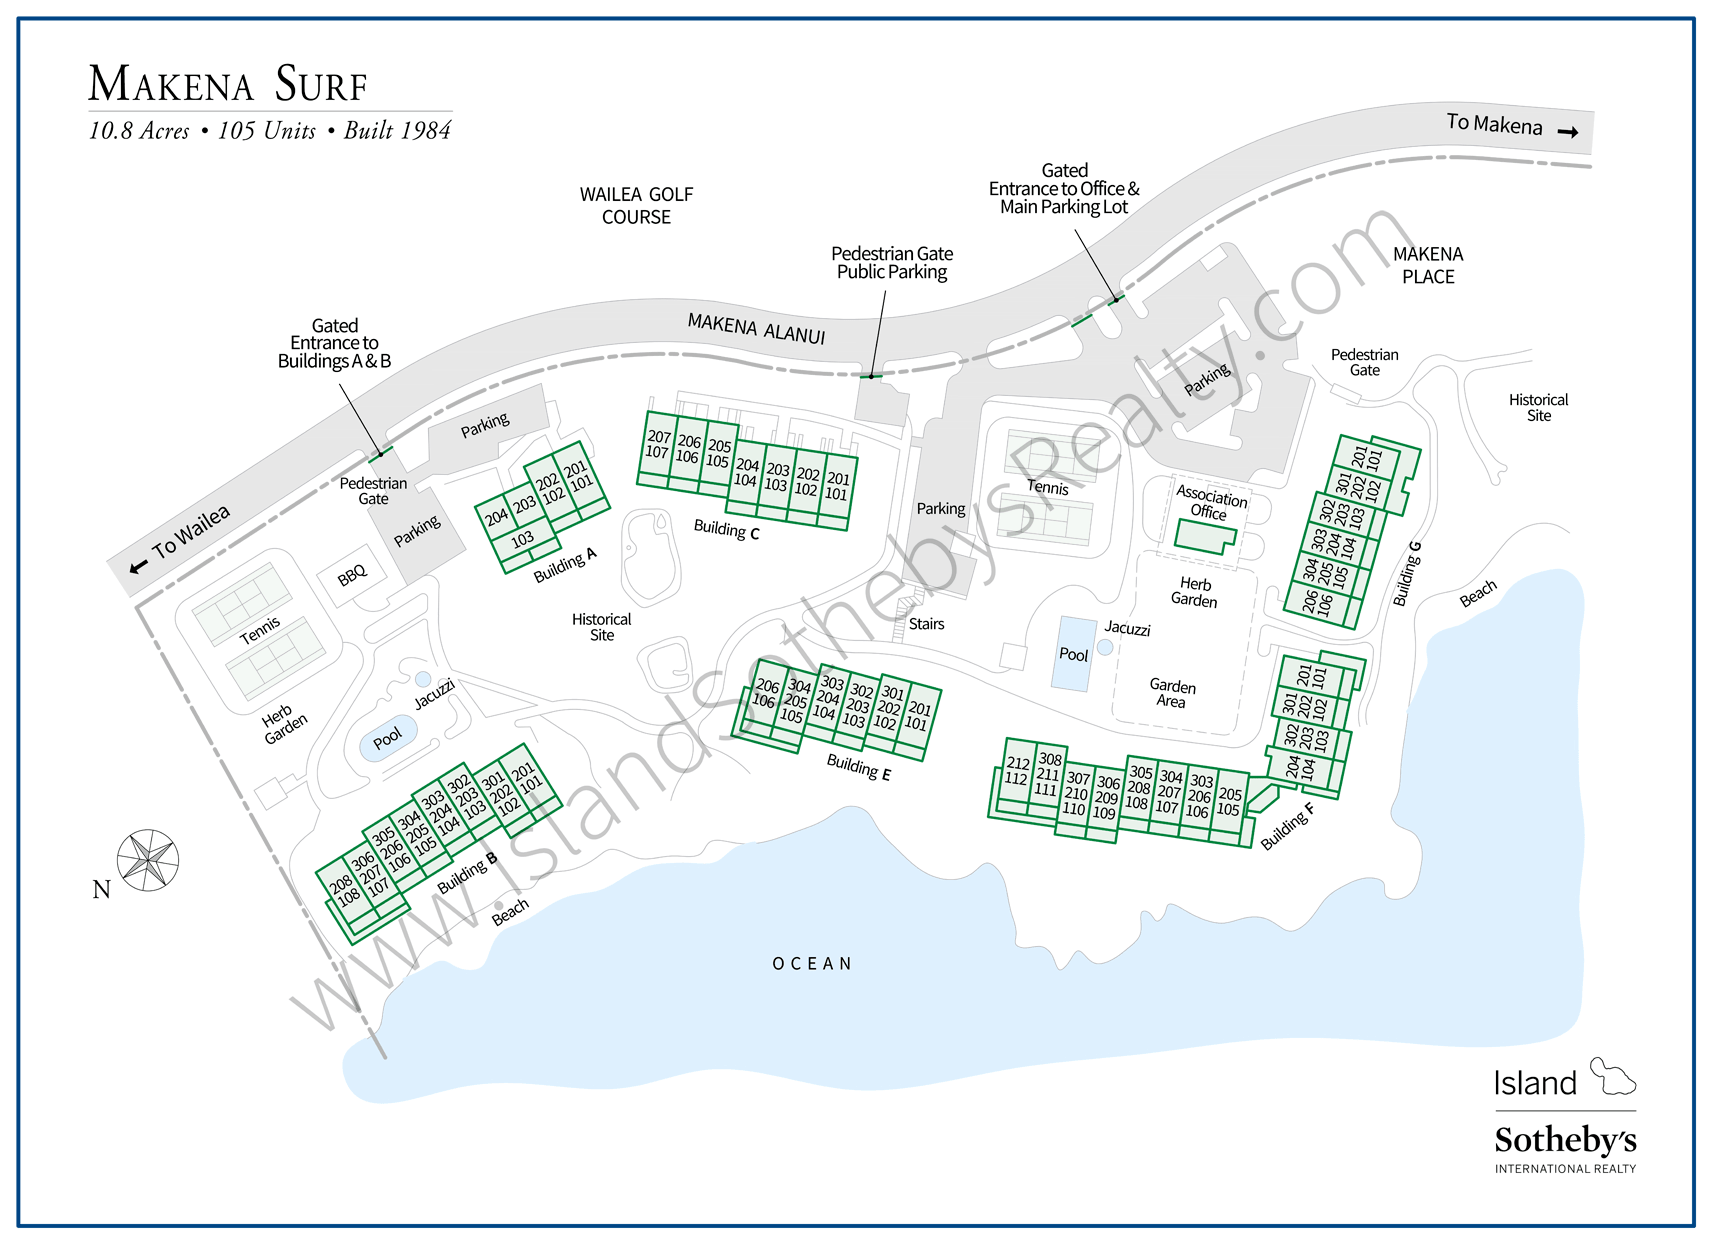 Map of Makena Surf Maui